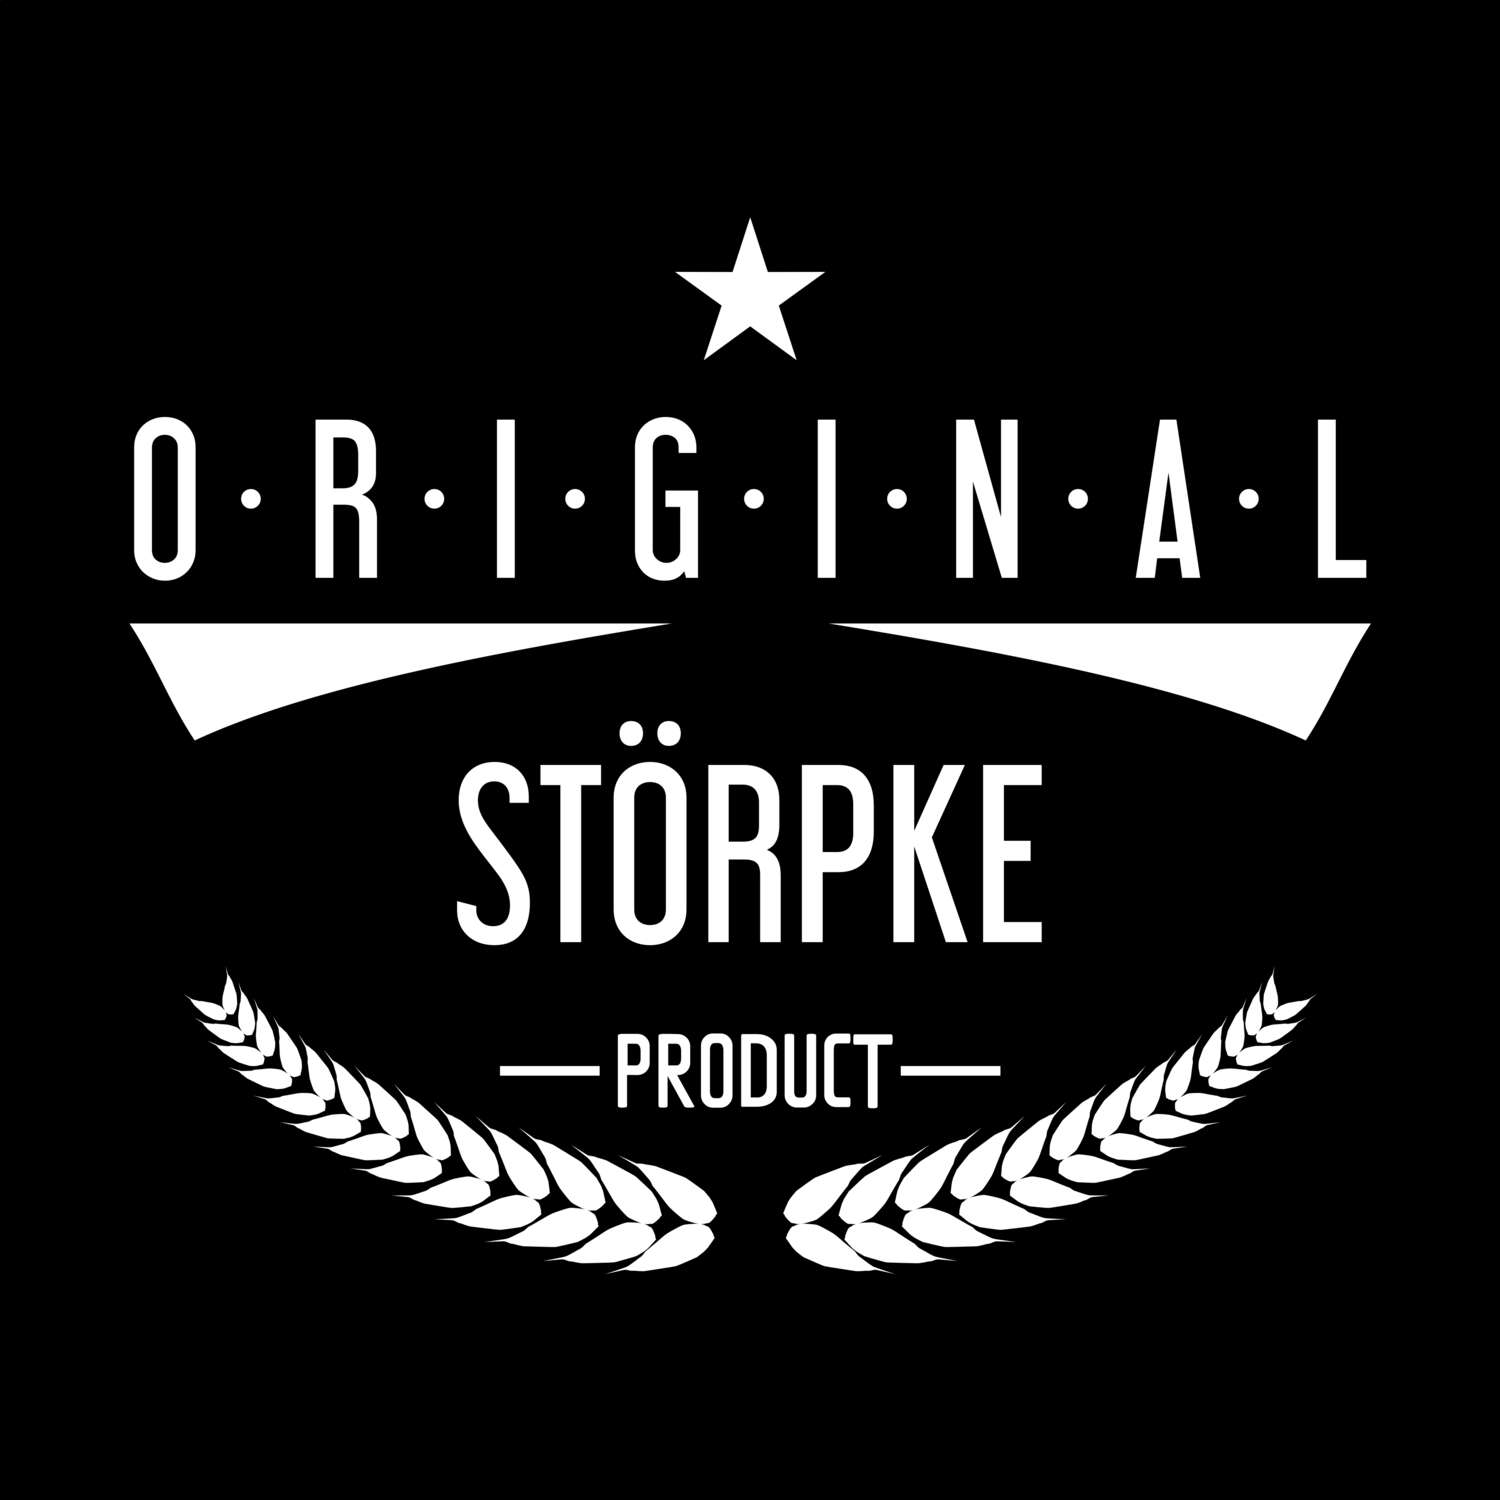 Störpke T-Shirt »Original Product«